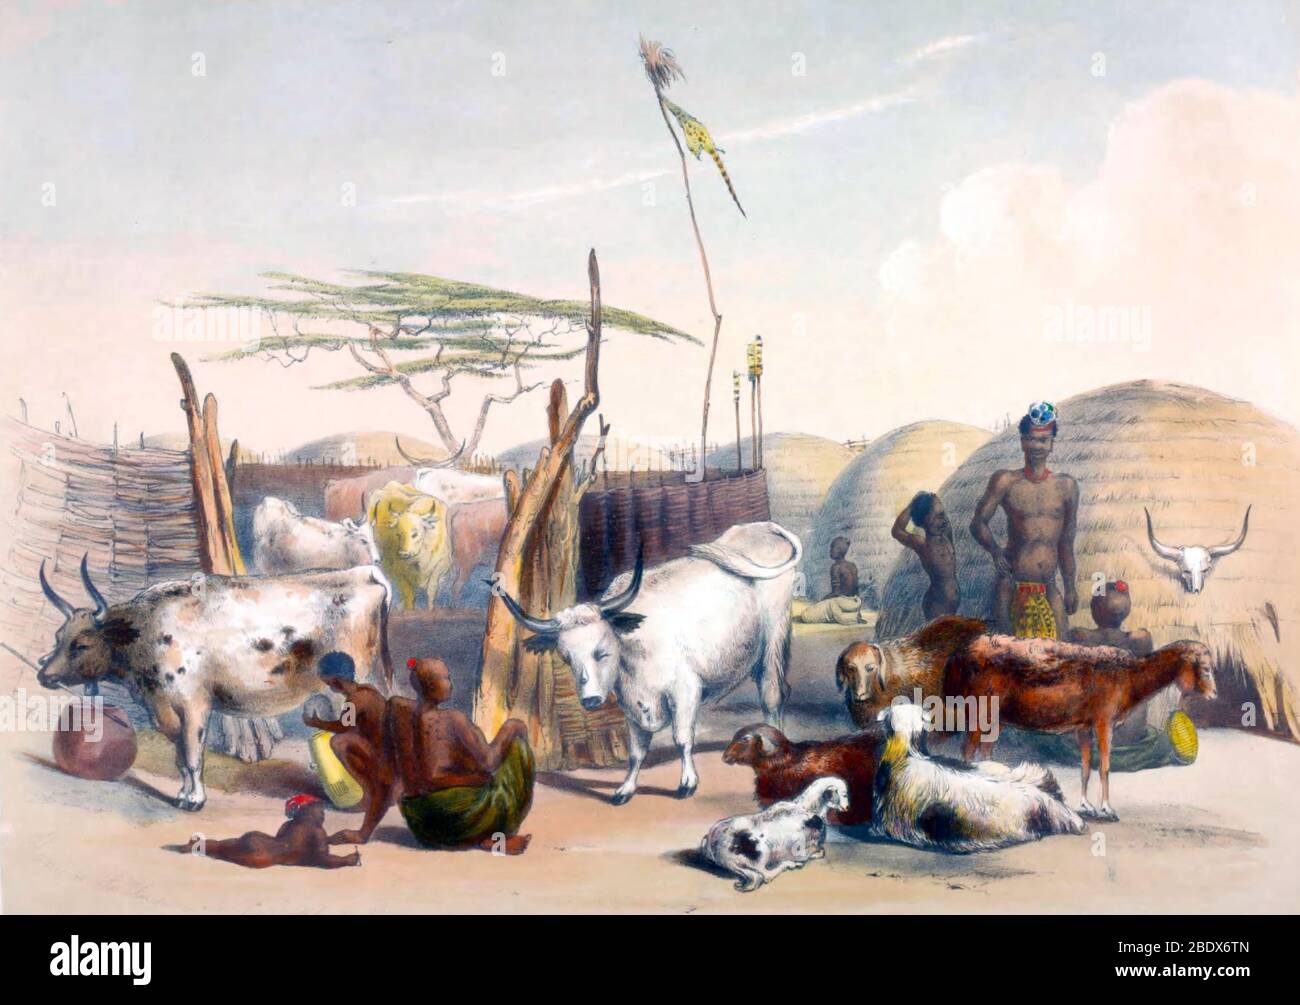 Afrique du Sud, Zulu Kraal, 1840 Banque D'Images